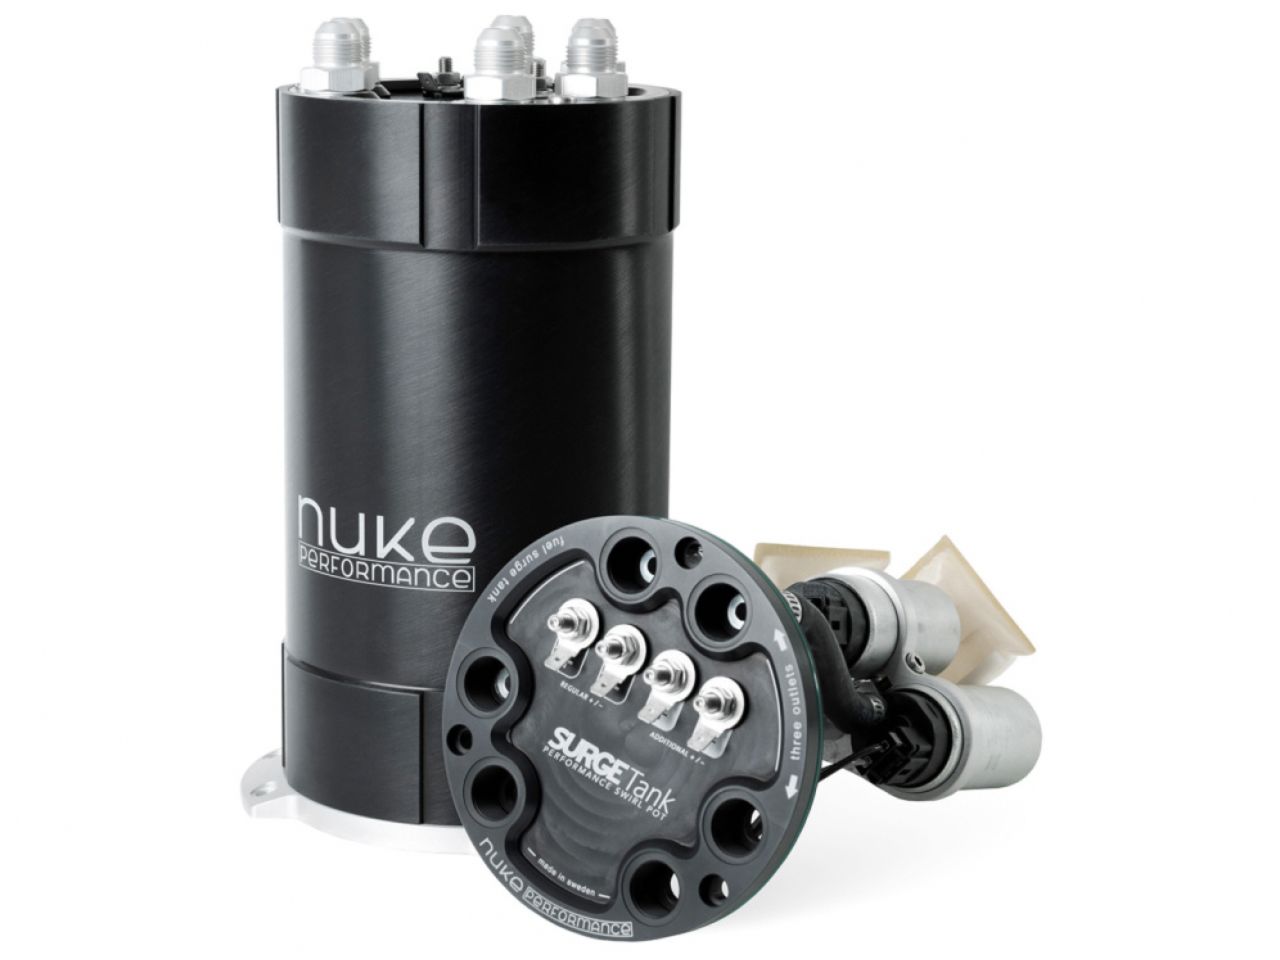 Nuke Performance 2G Fuel Surge Tank 3.0 Liter Up To 3 Internal DW400 Fuel Pumps